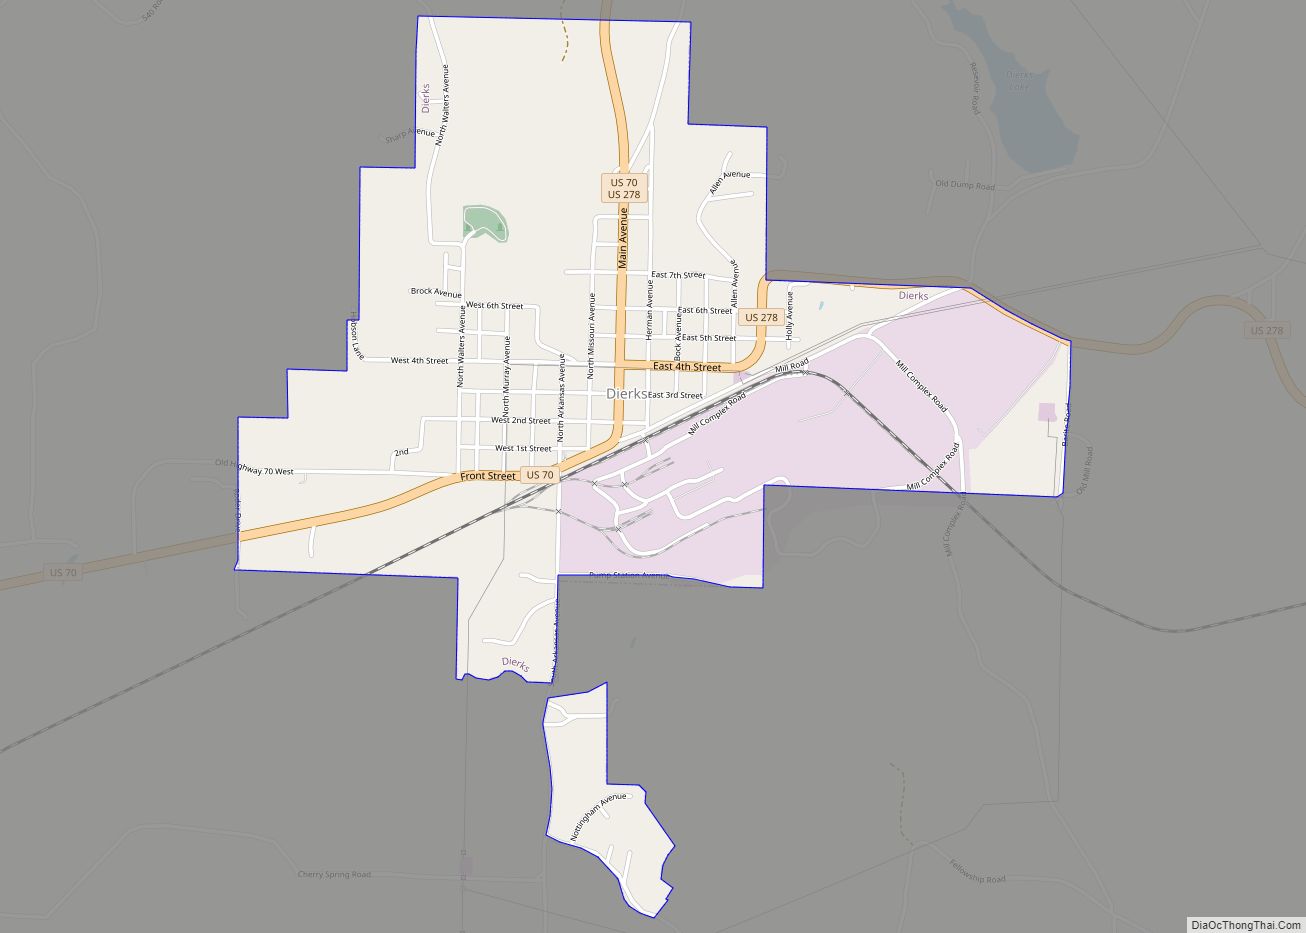 Map of Dierks city